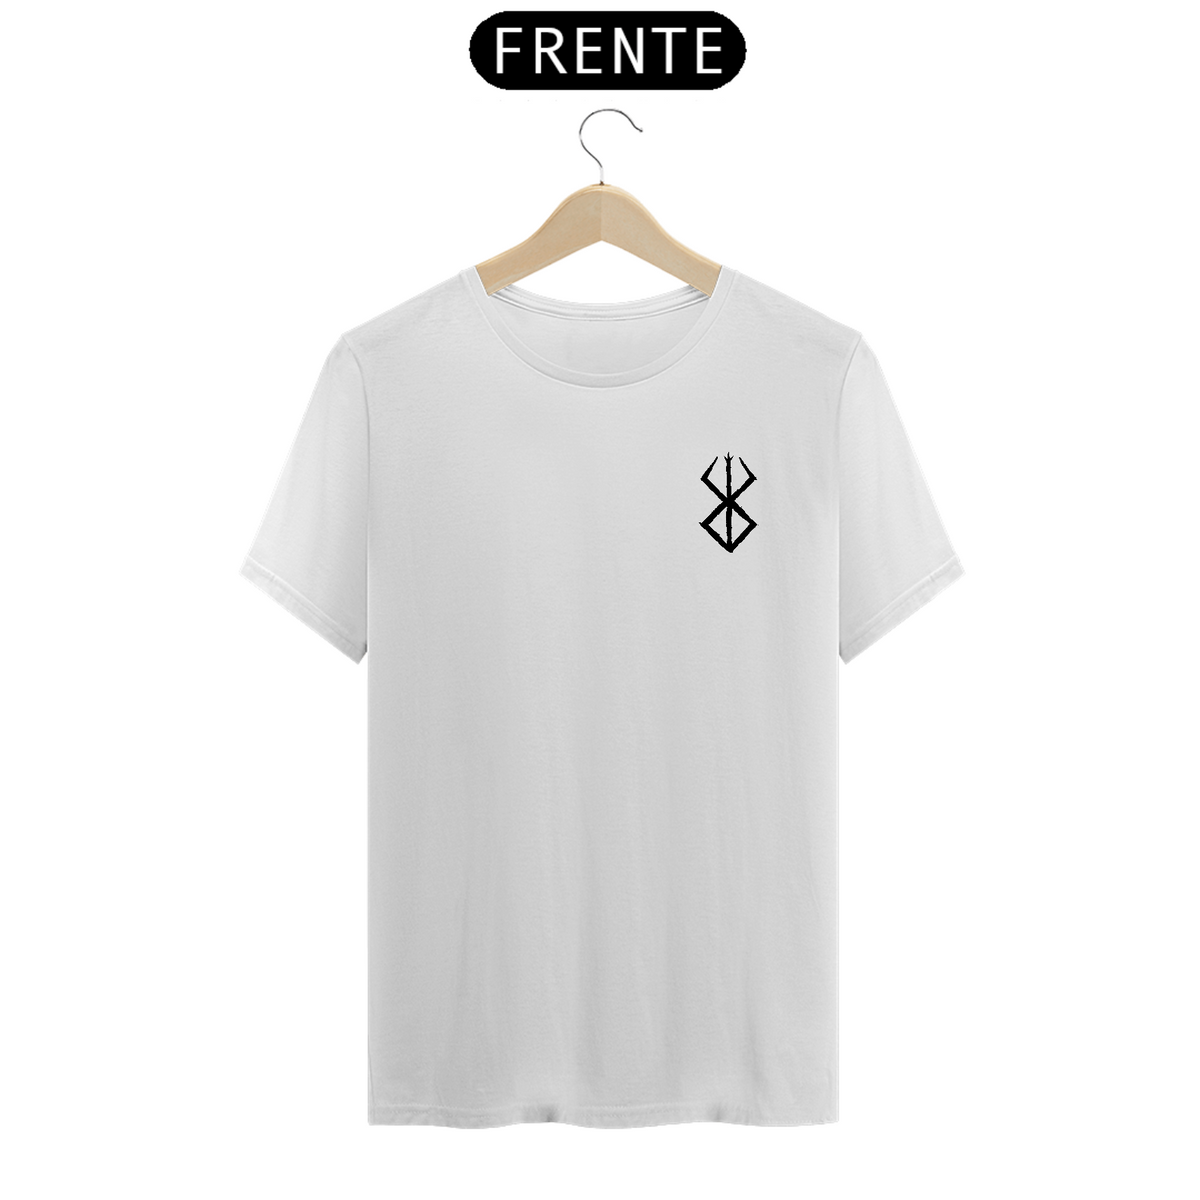 Nome do produto: Camiseta Branca - Berserk